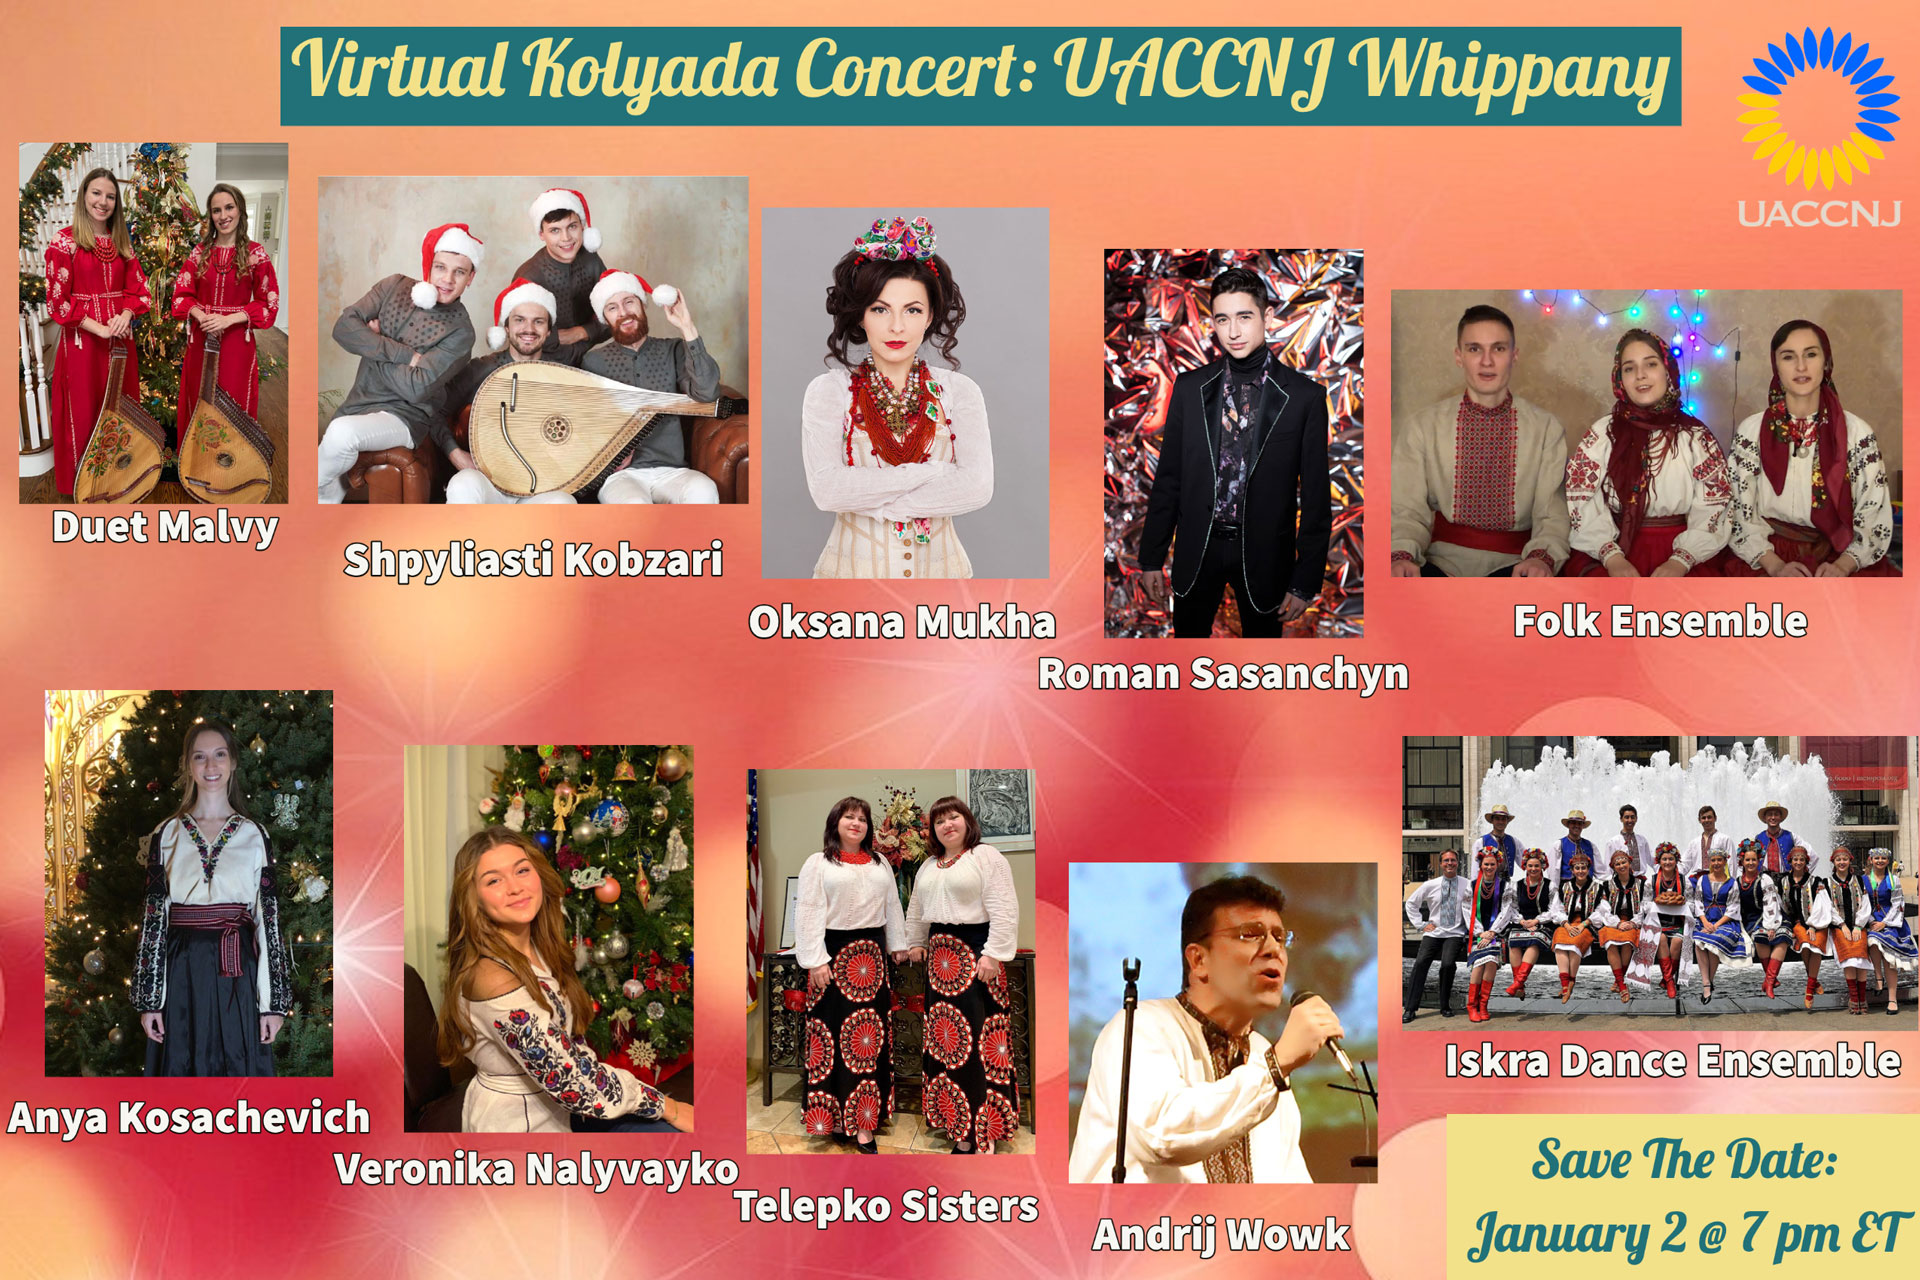 Virtual Kolyada Concert UACCNJ Whippany Virtual Kolyada Concert UACCNJ Whippany